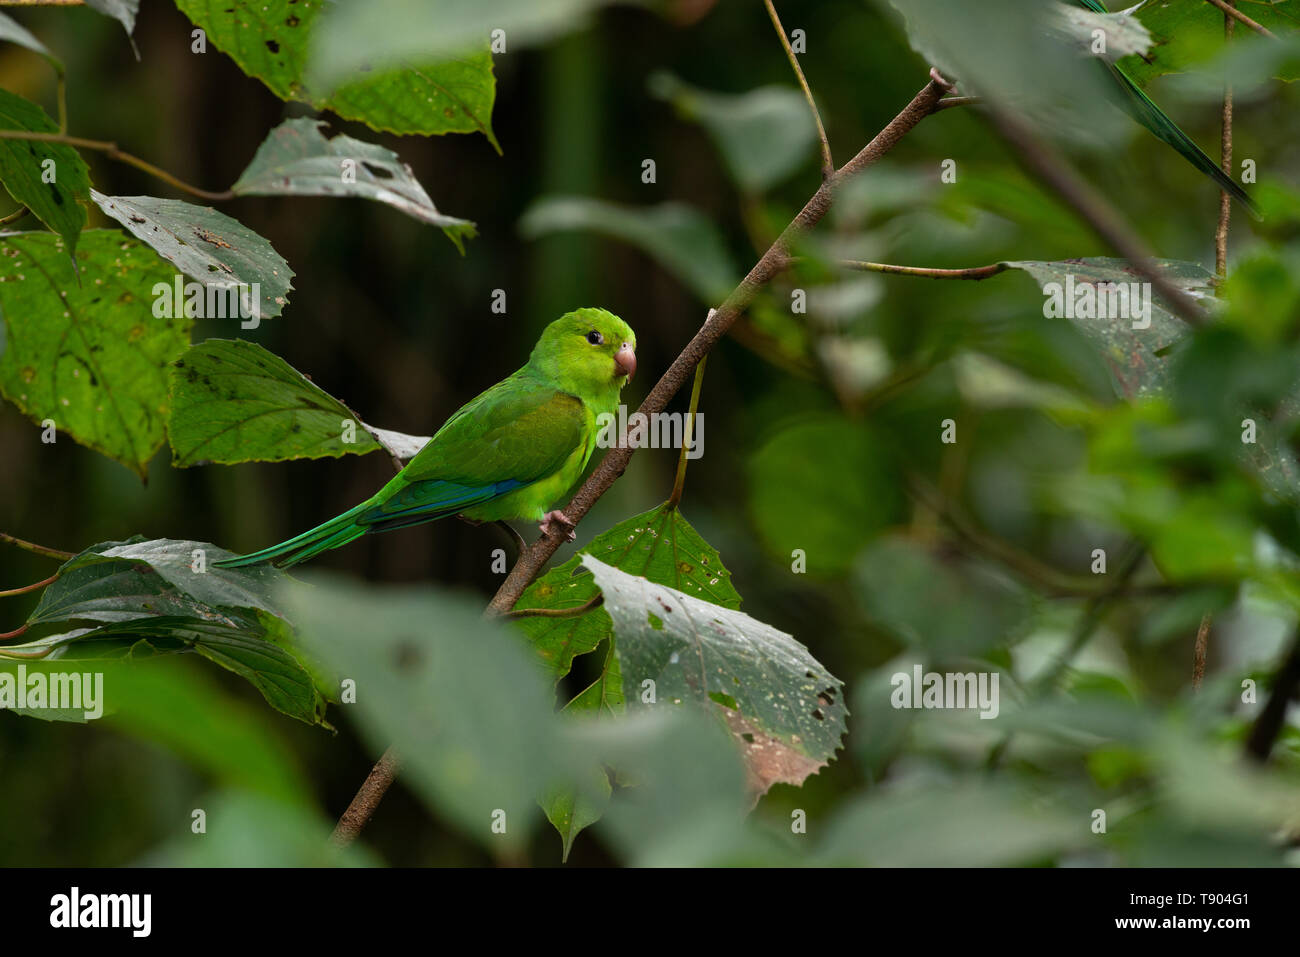 A Plain Parakeet (Brotogeris tirica) from the Atlantic Rainforest of SE Brazil Stock Photo